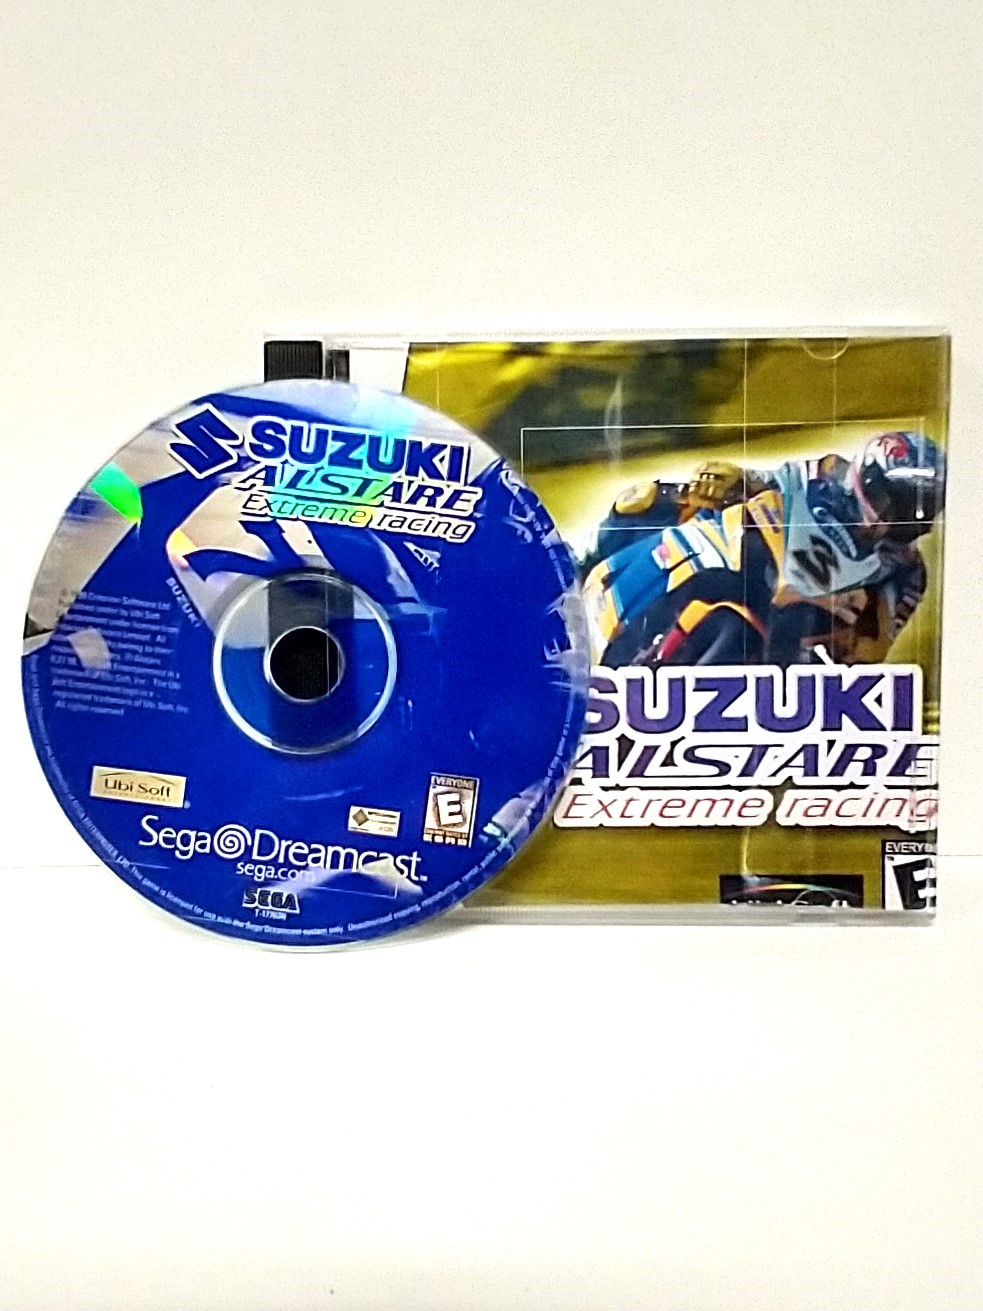 Sega Dreamcast Suzuki Alstare Extreme Racing Disc Only (Good)